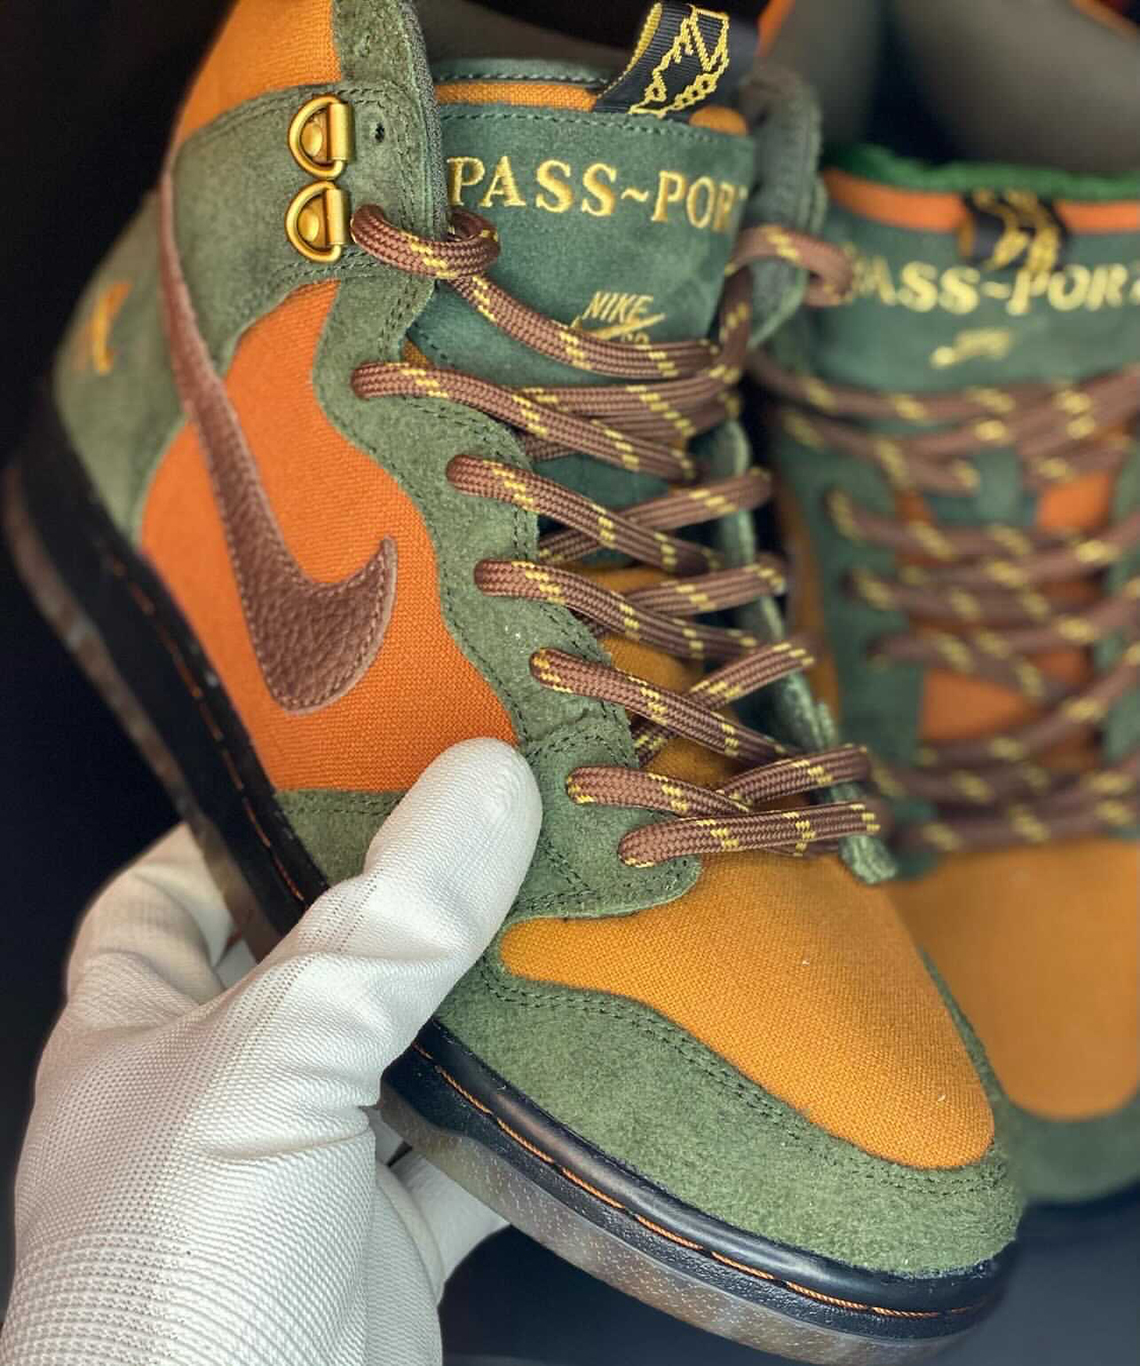 PASS~PORT Nike SB Dunk High Collaboration | SneakerNews.com